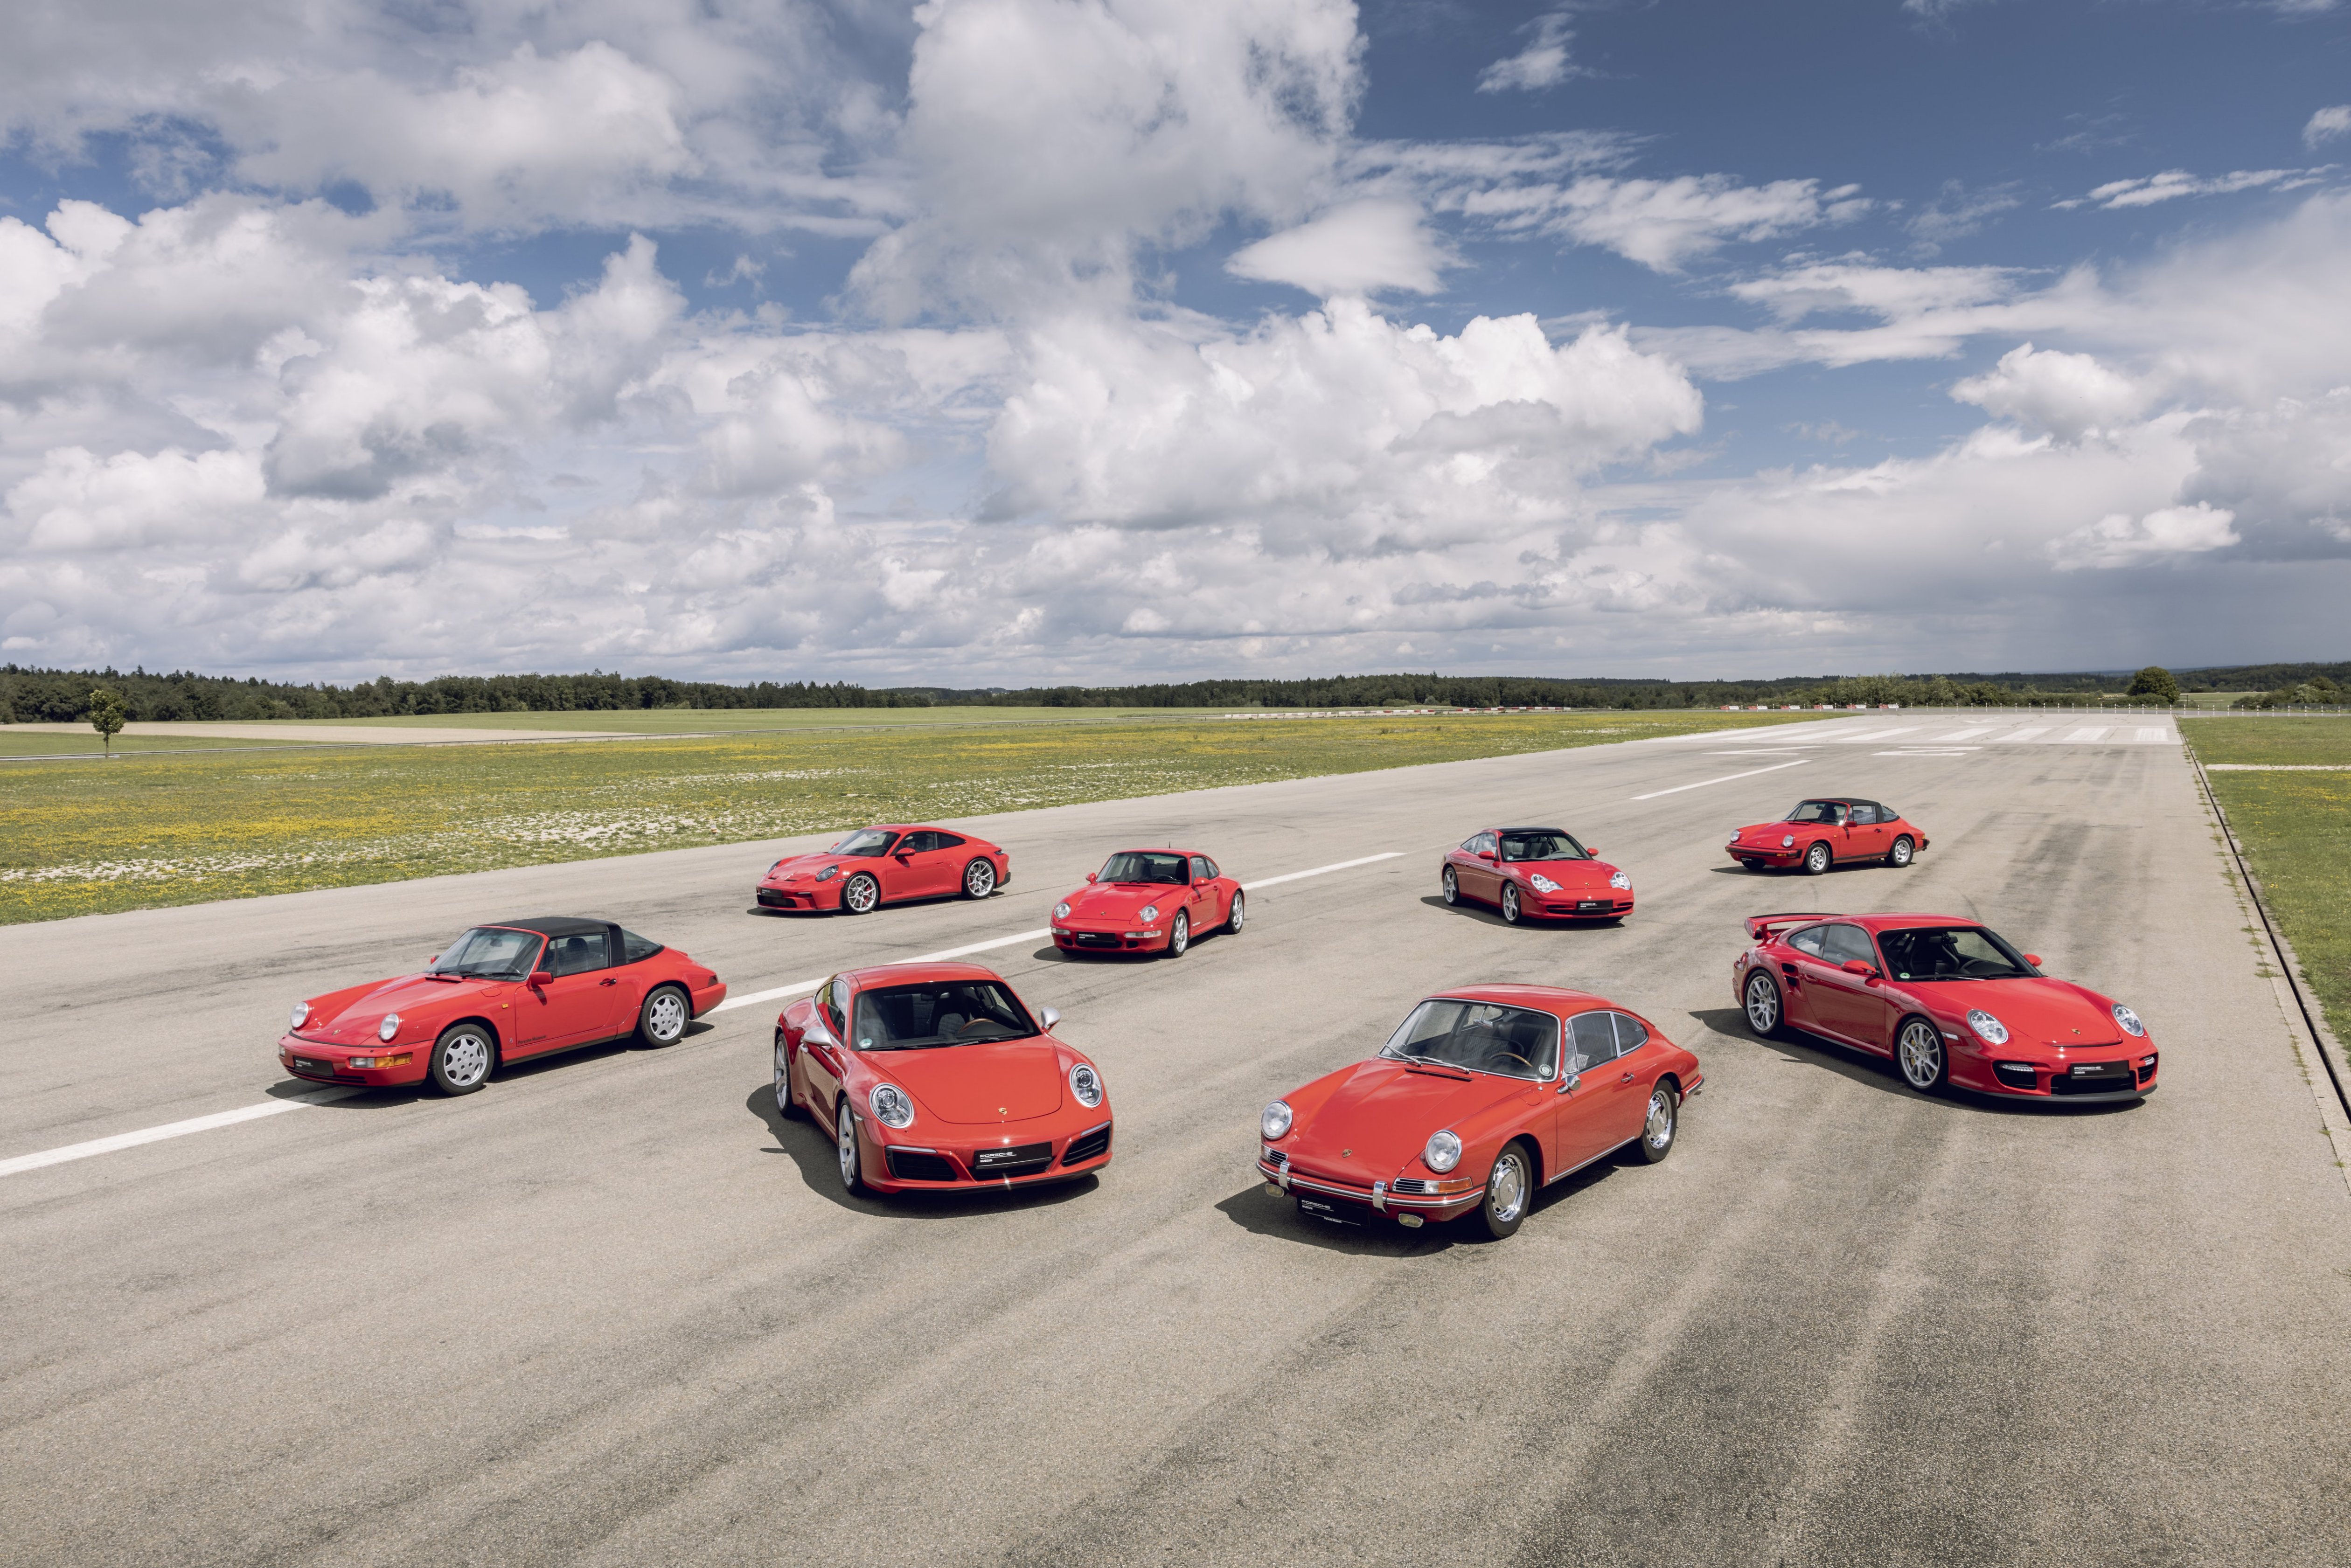 Eight red Porsche 911 cars on empty aircraft runway